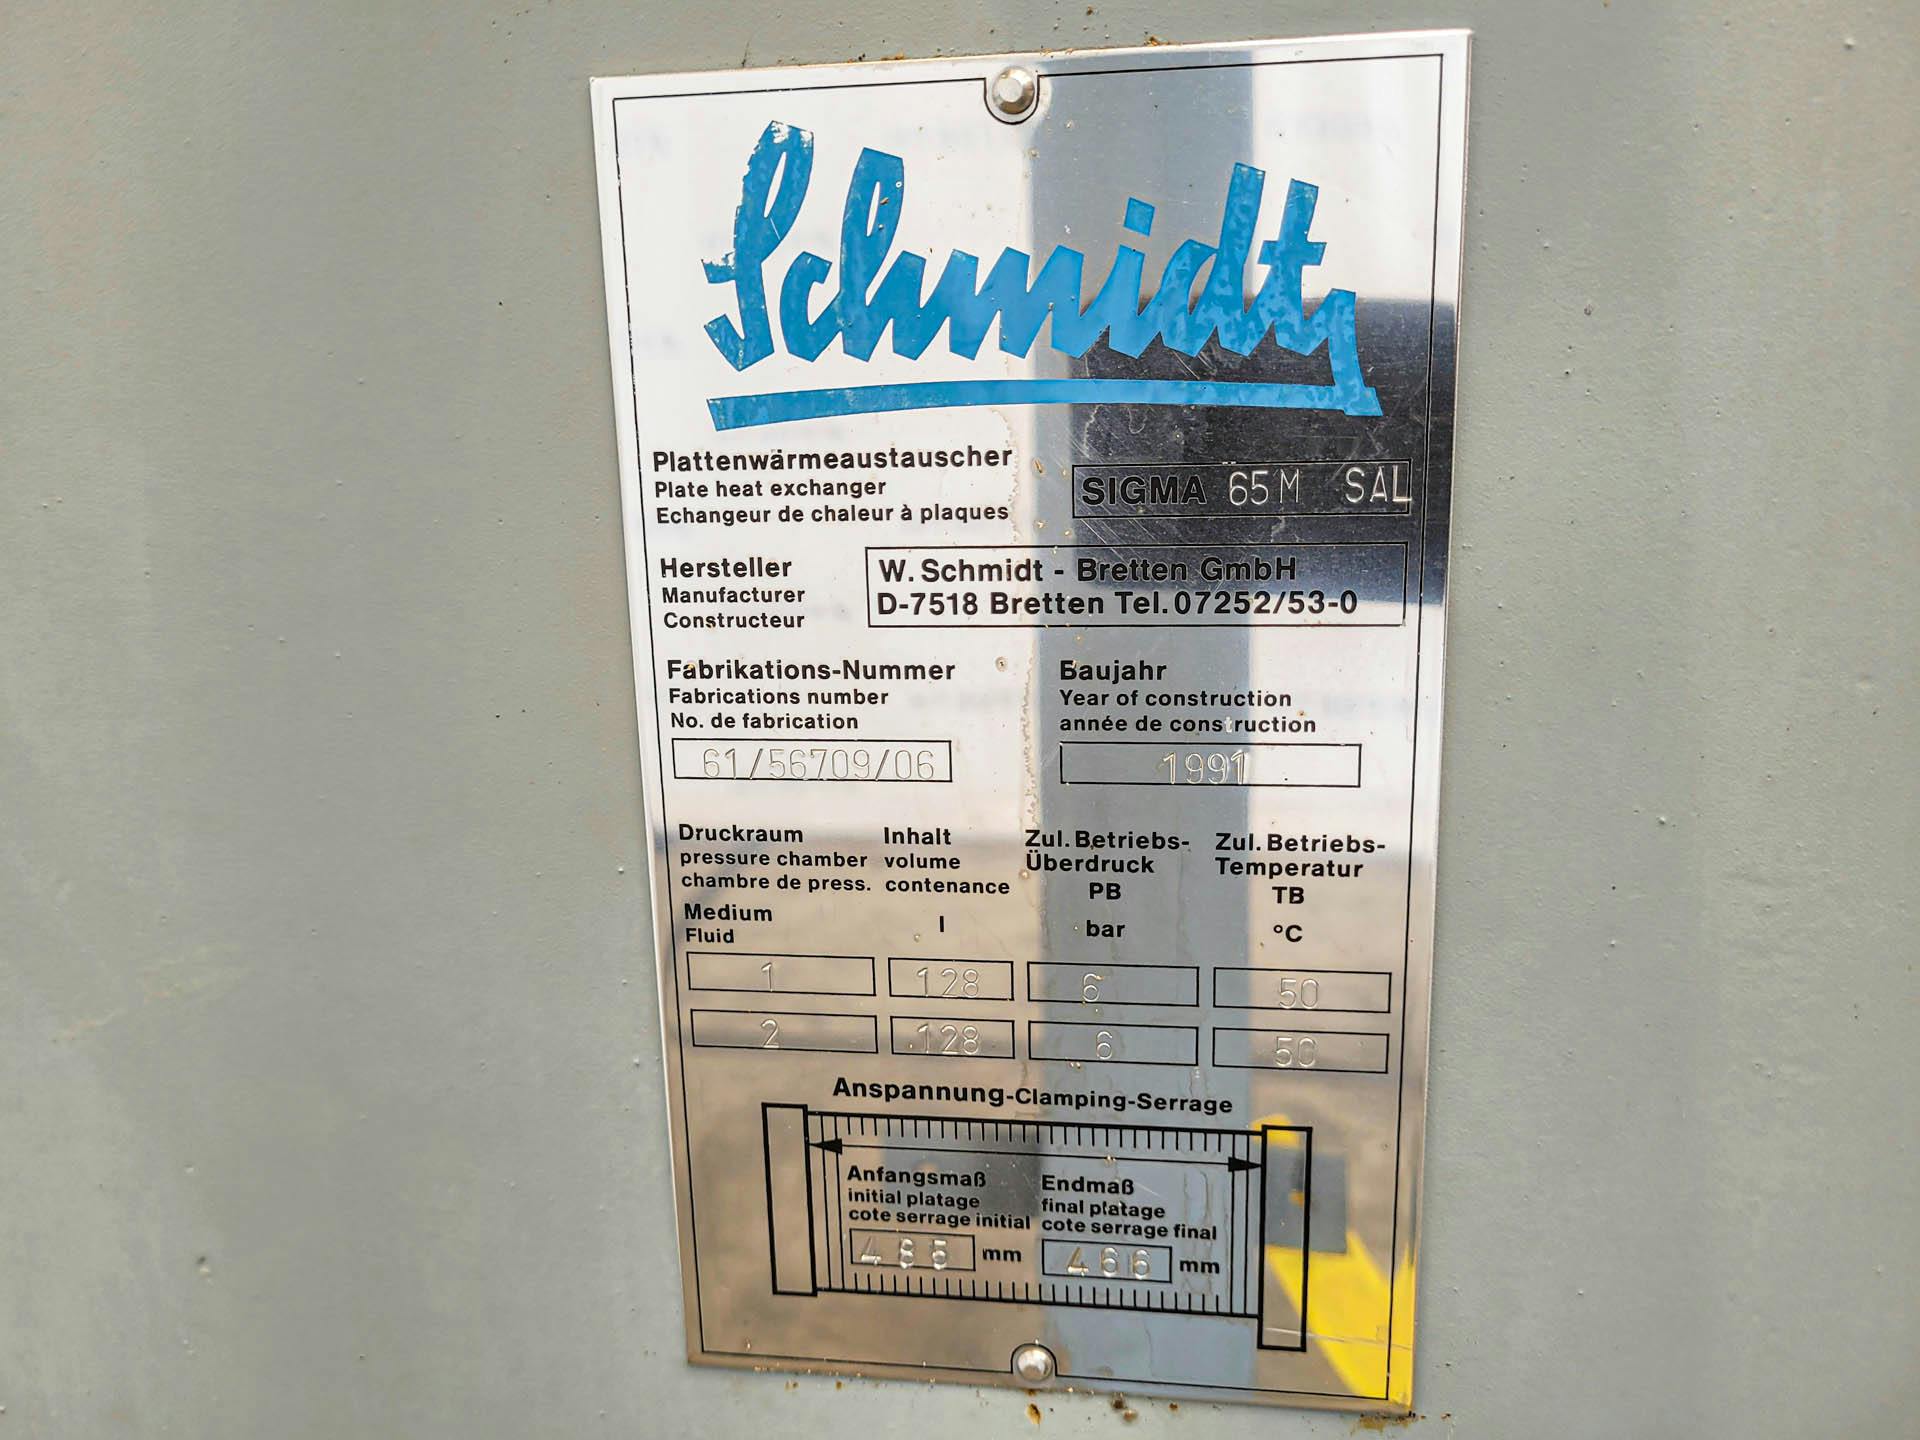 Schmidt Sigma 65M SAL - Intercambiador de calor de placas - image 5